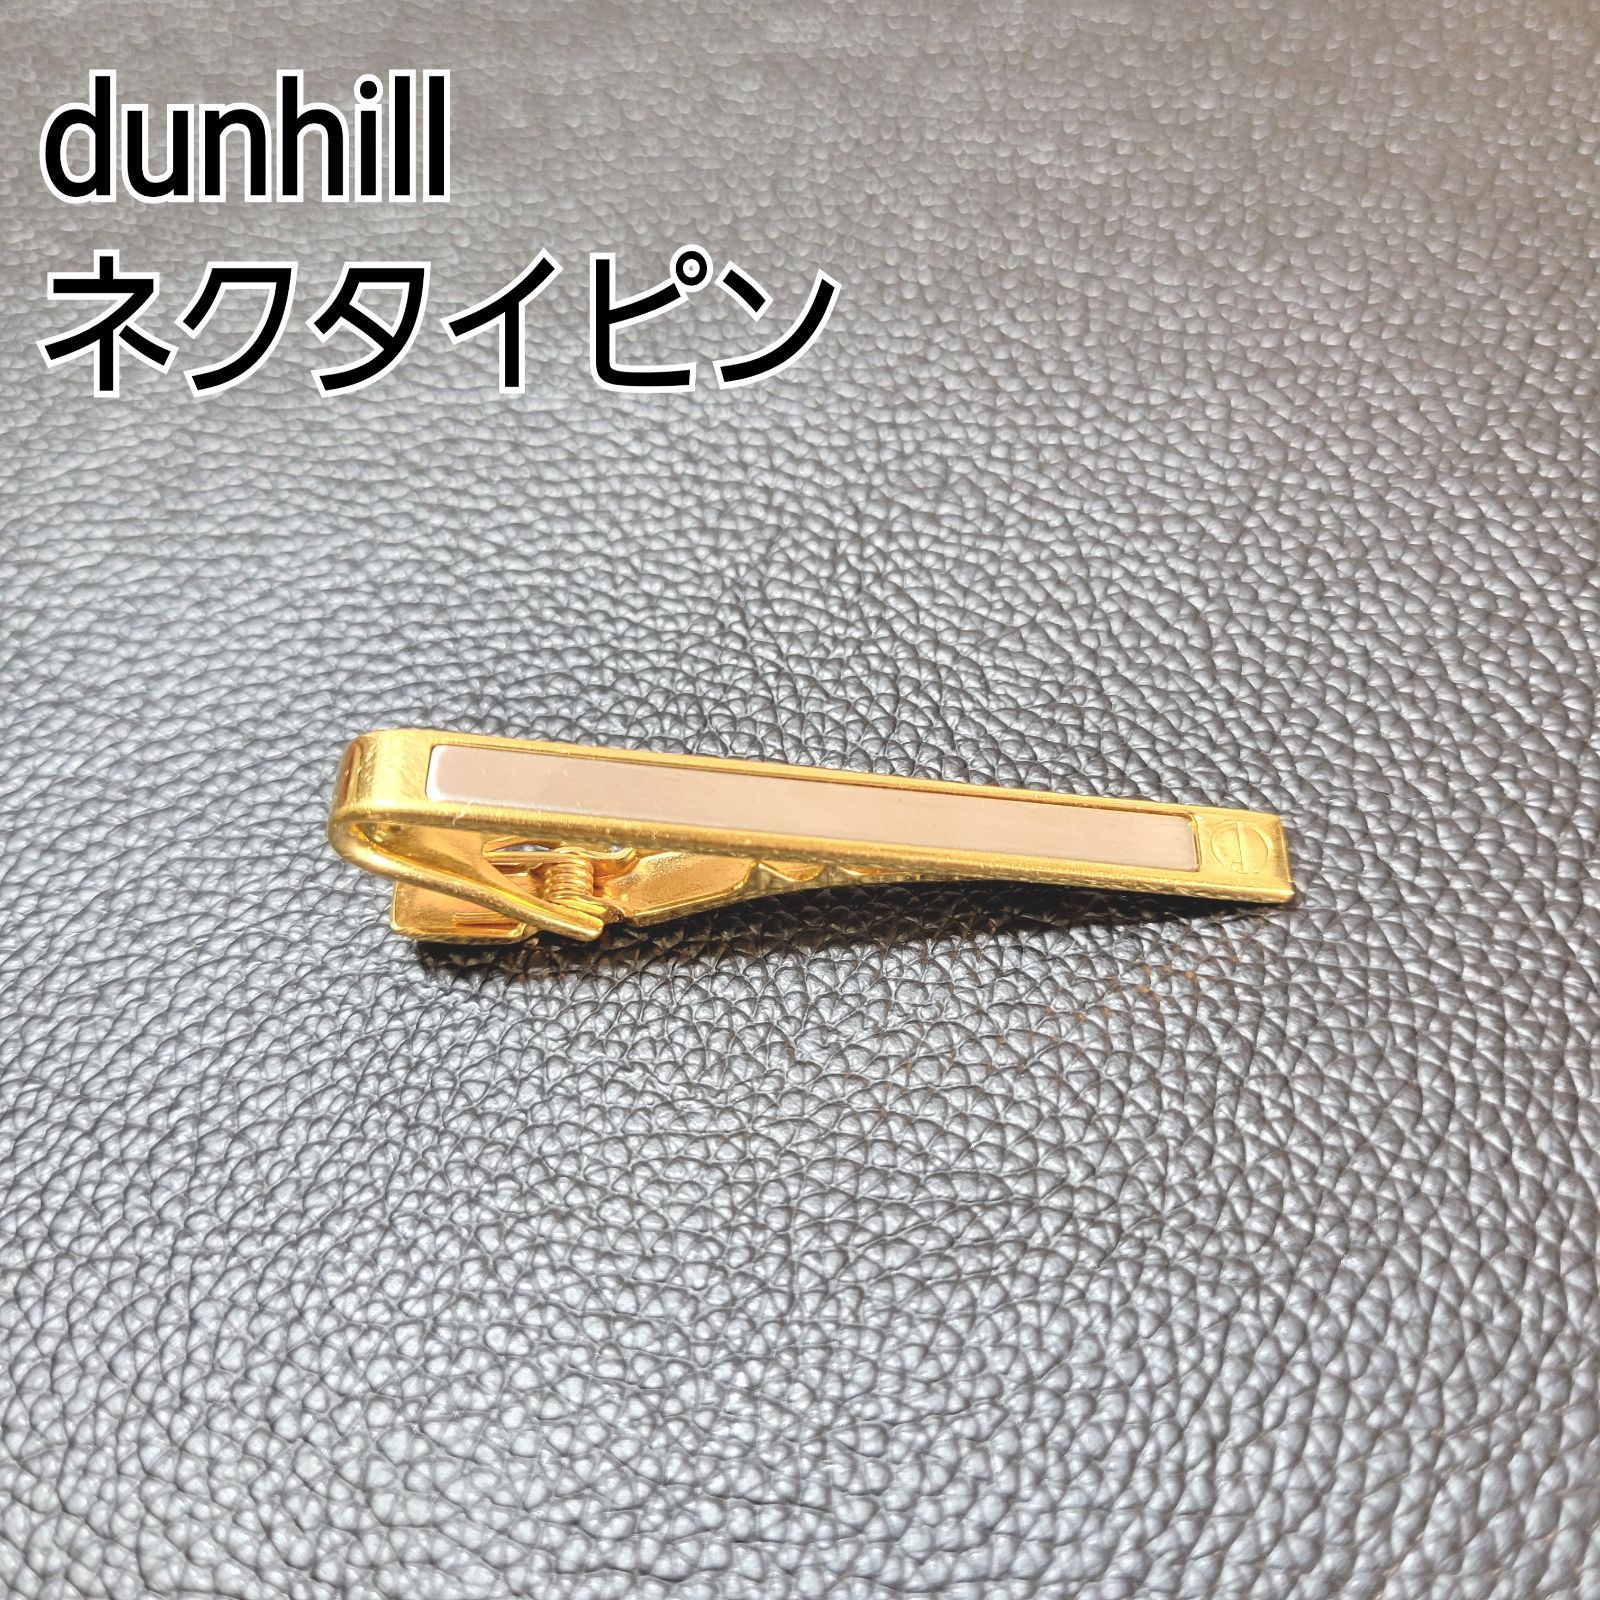 dunhill ダンヒル ネクタイピン ゴールド シルバー - Shop一期一会 - メルカリ